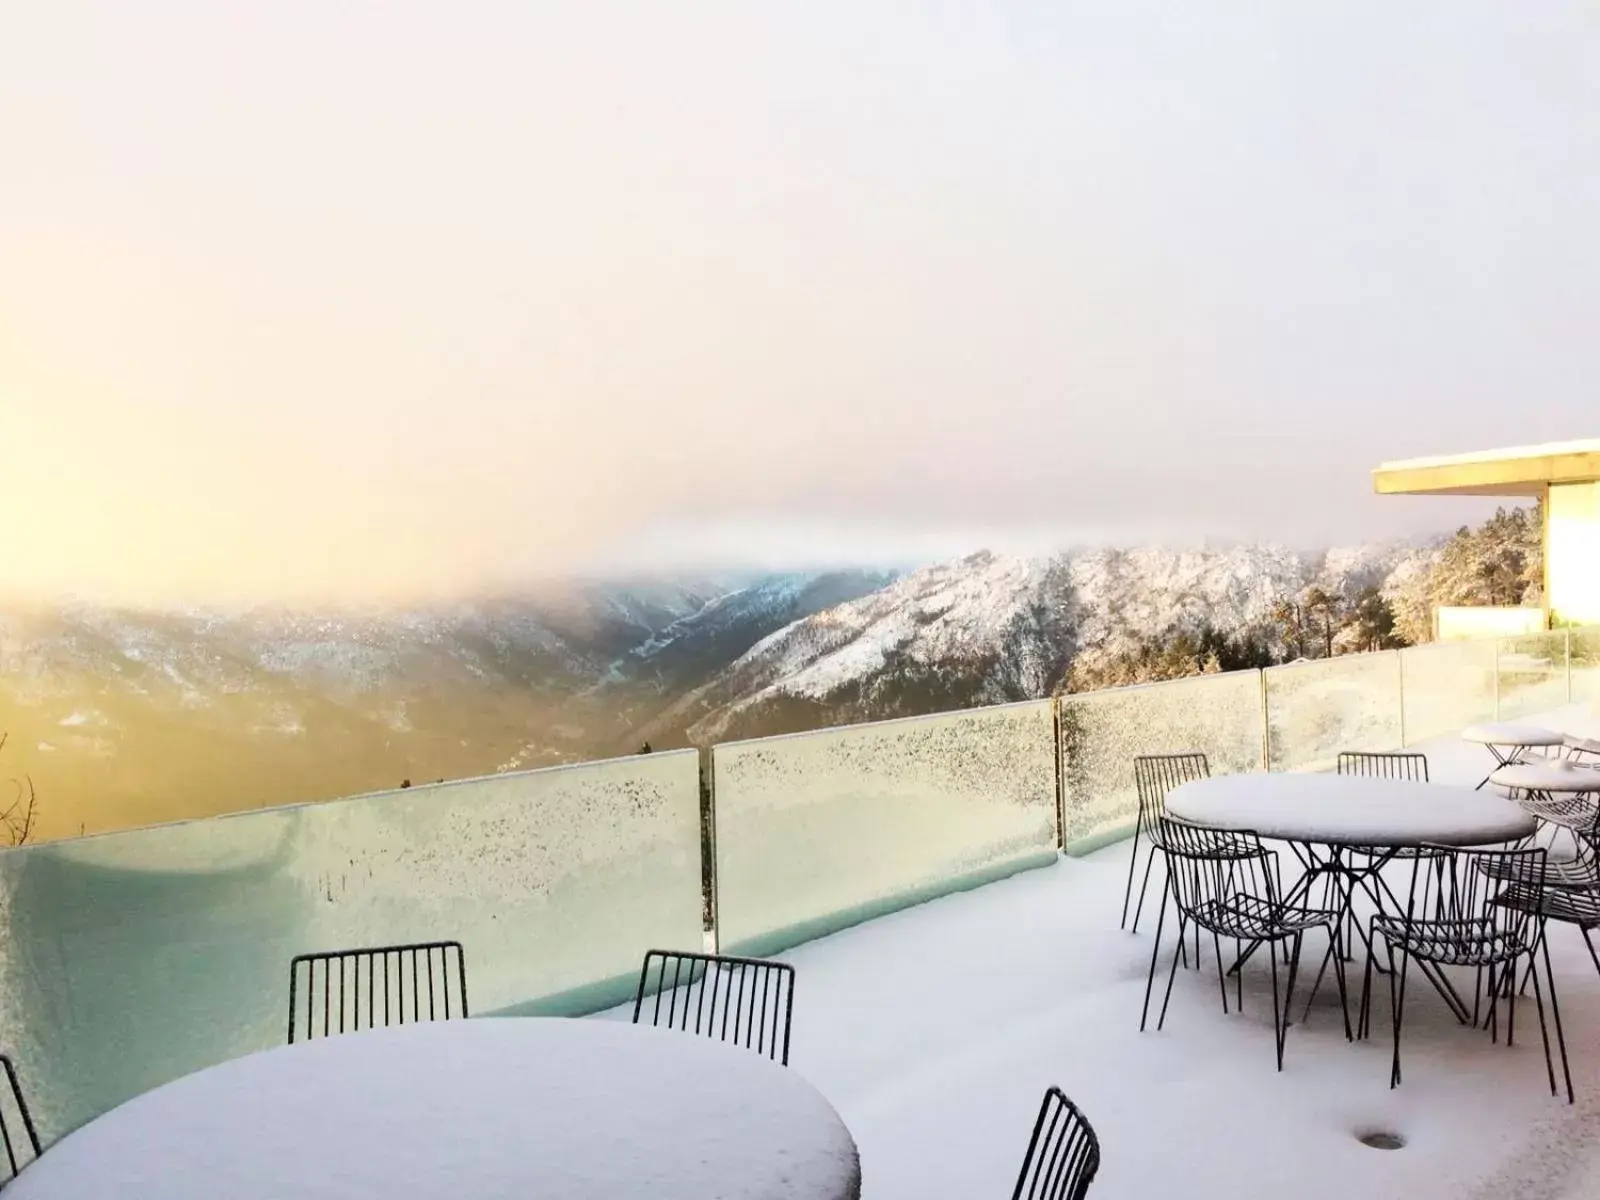 Winter in Casa de São Lourenço - Burel Mountain Hotels